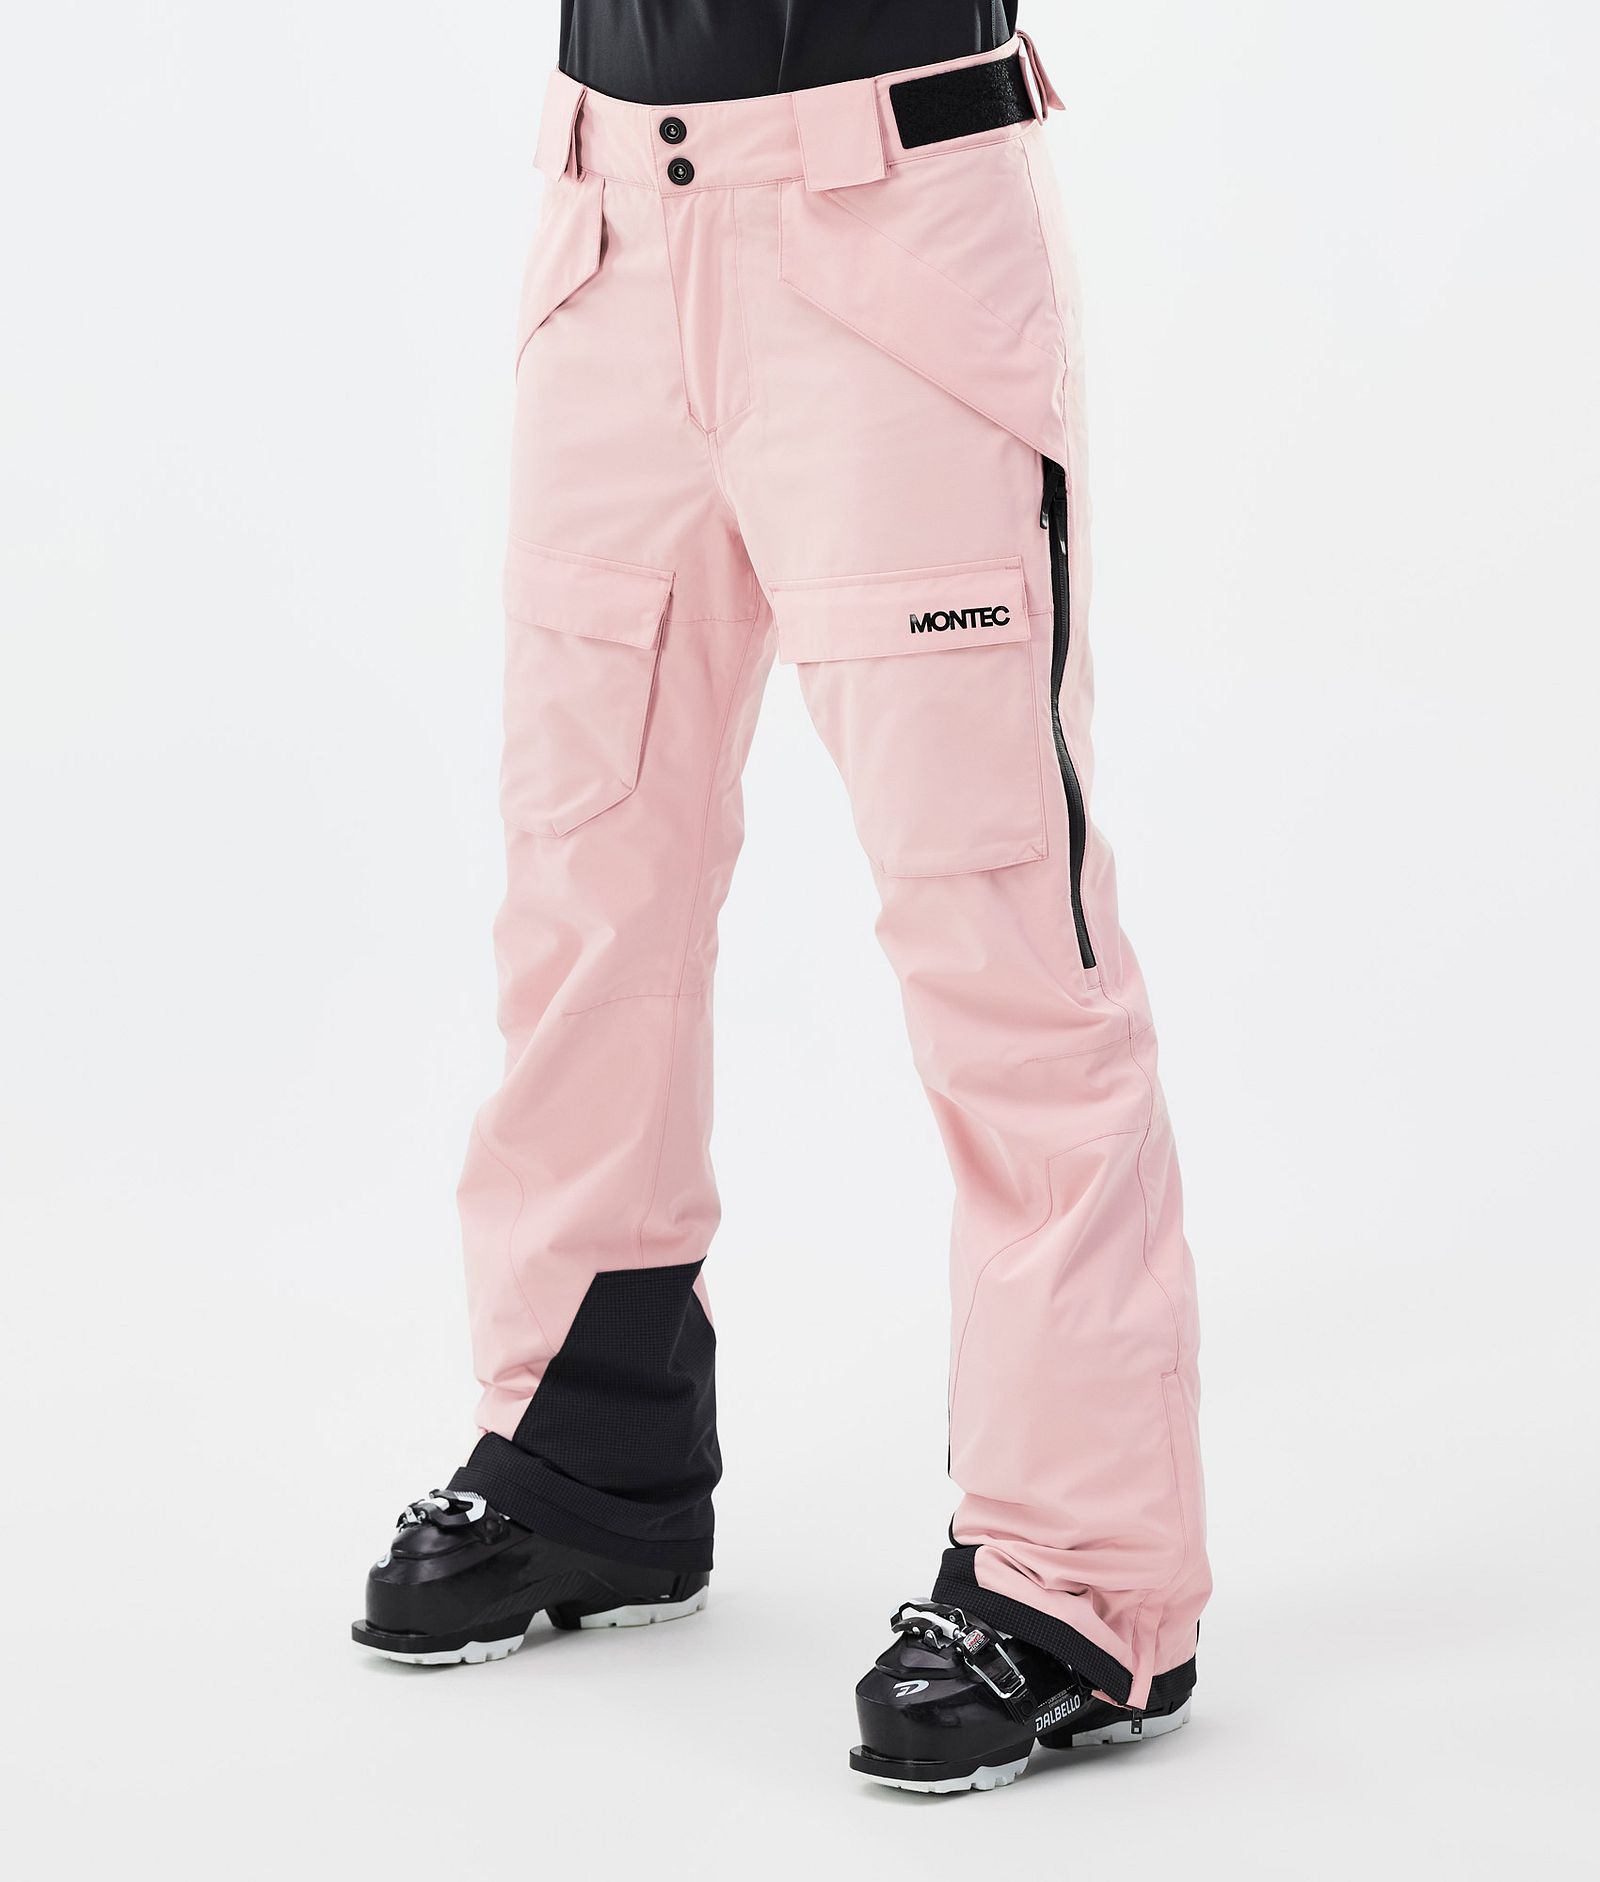 Kirin W Pantaloni Sci Donna Soft Pink, Immagine 1 di 6